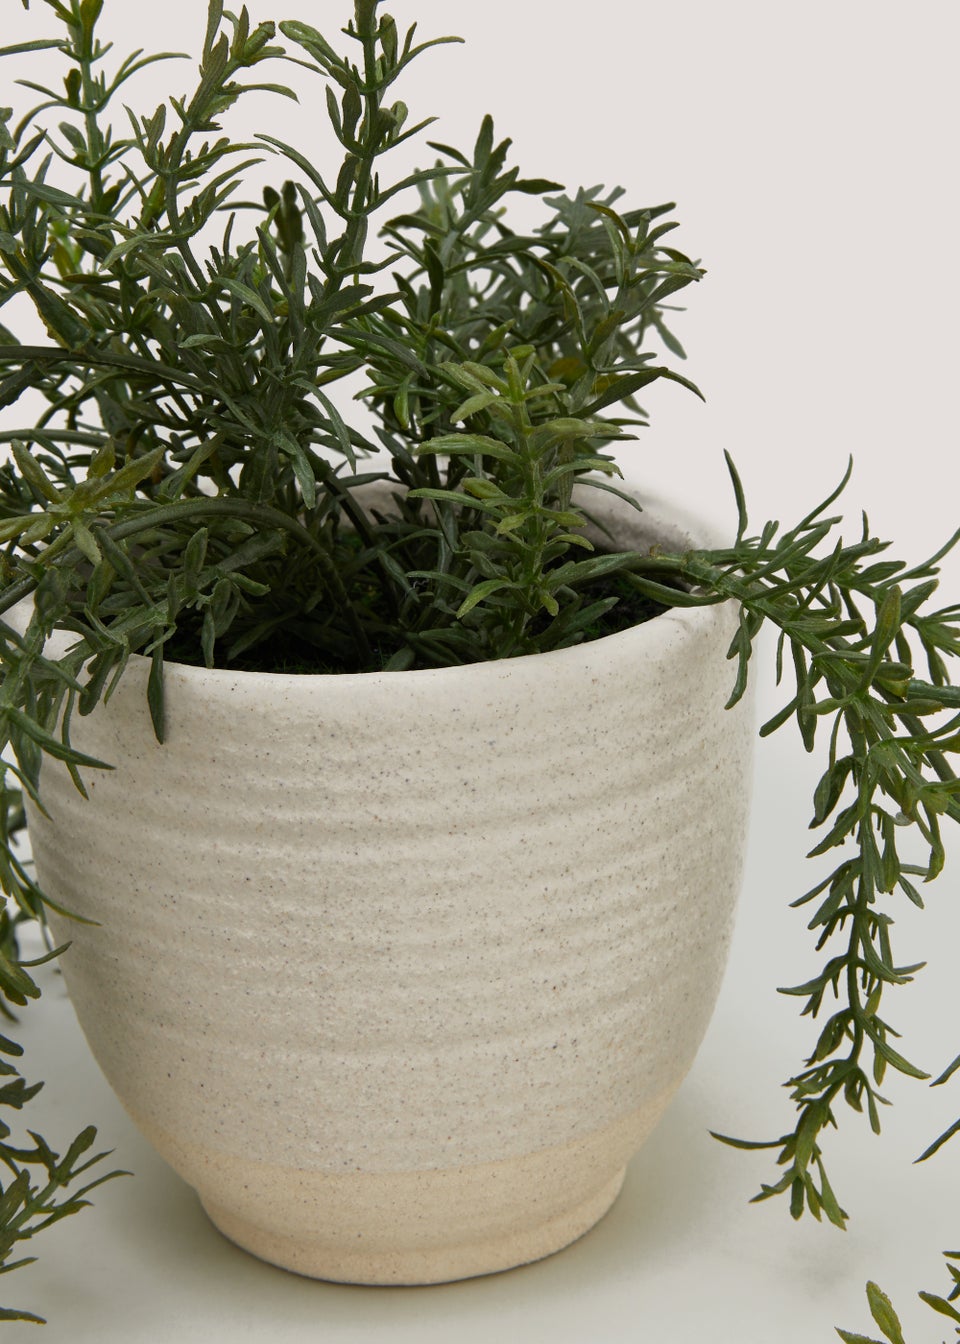 Trailing Herb in Ceramic Pot (9.5cm x 1cm)